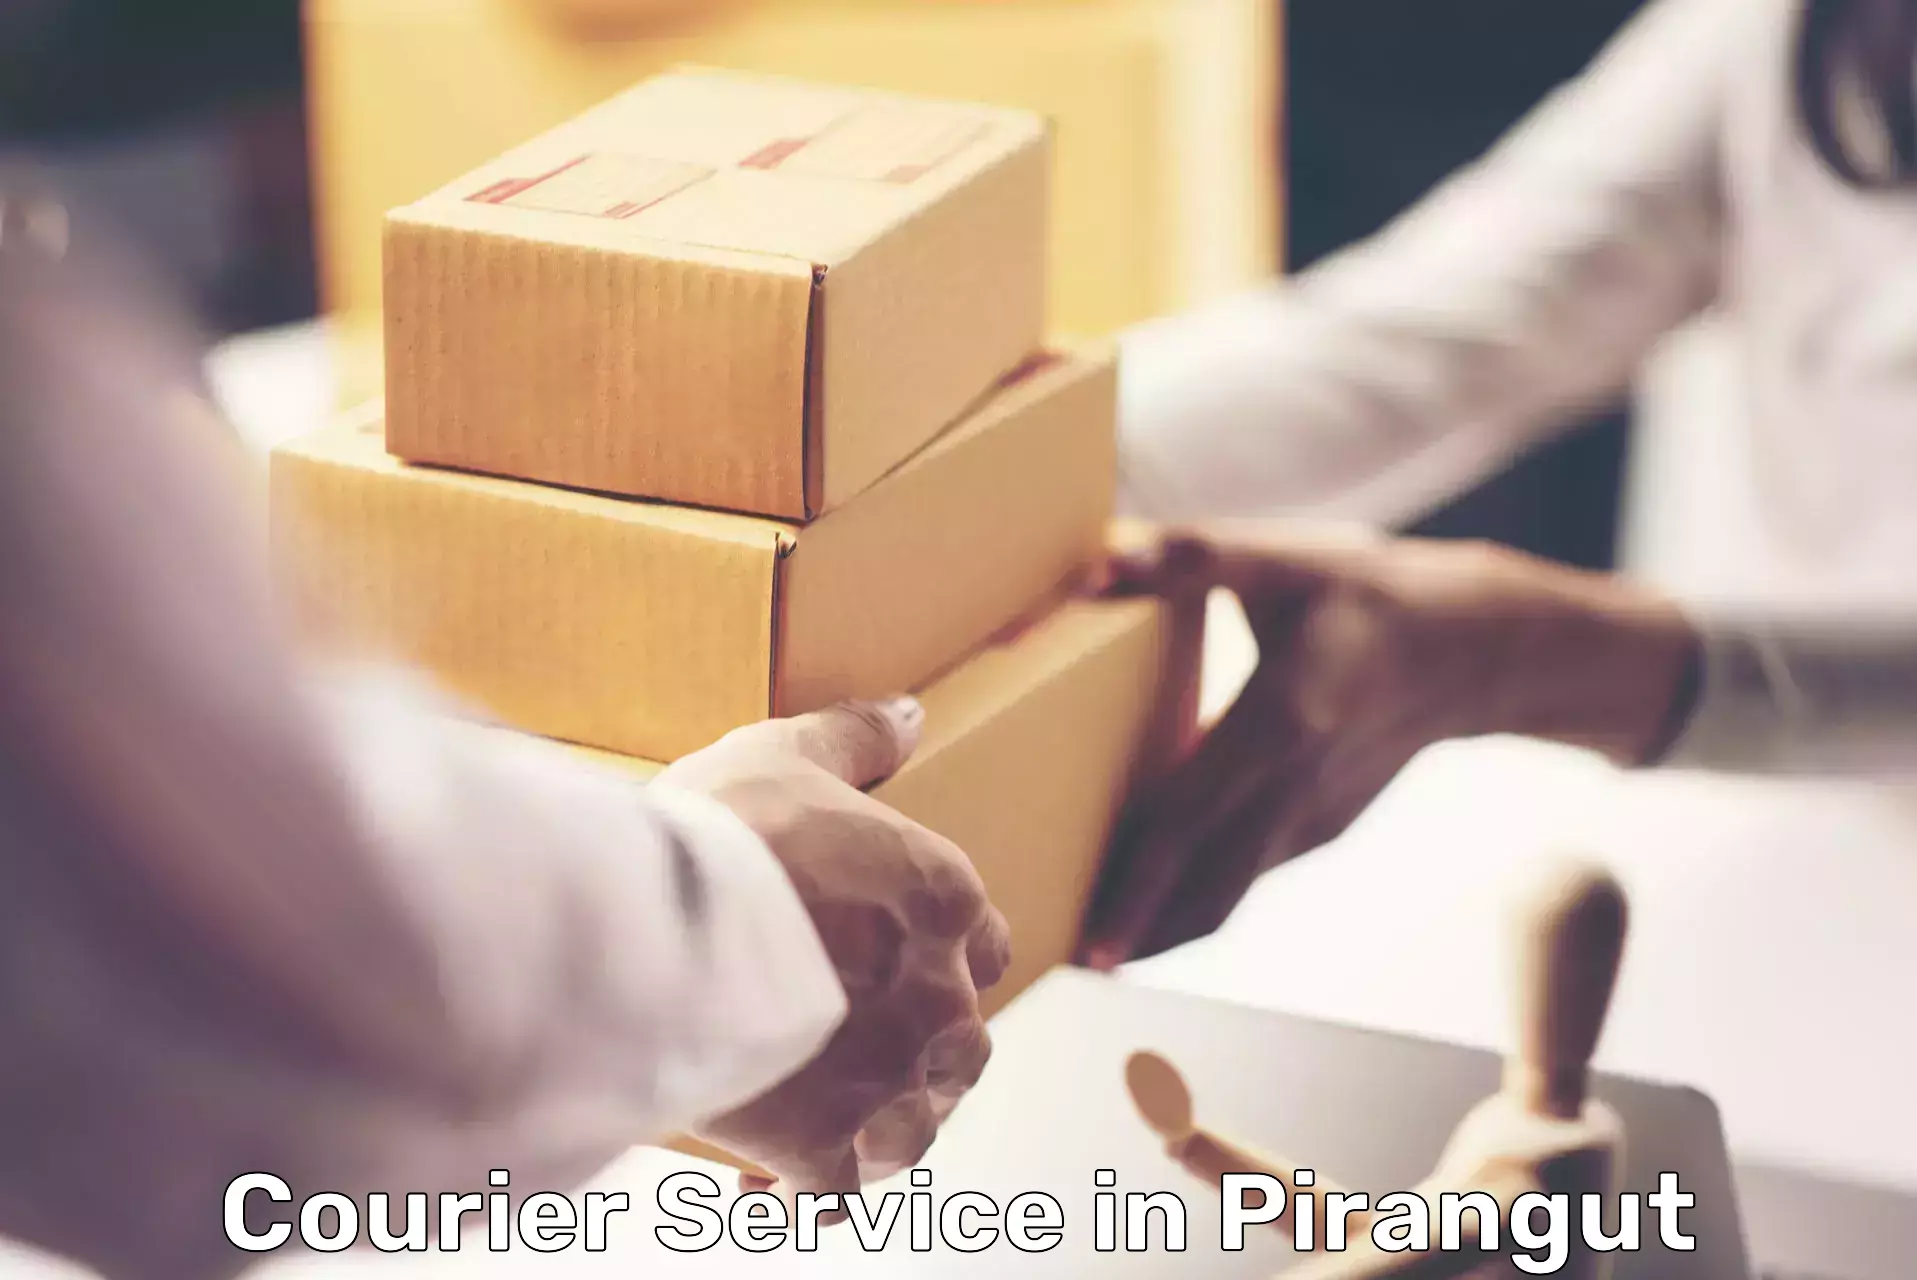 Customer-focused courier in Pirangut